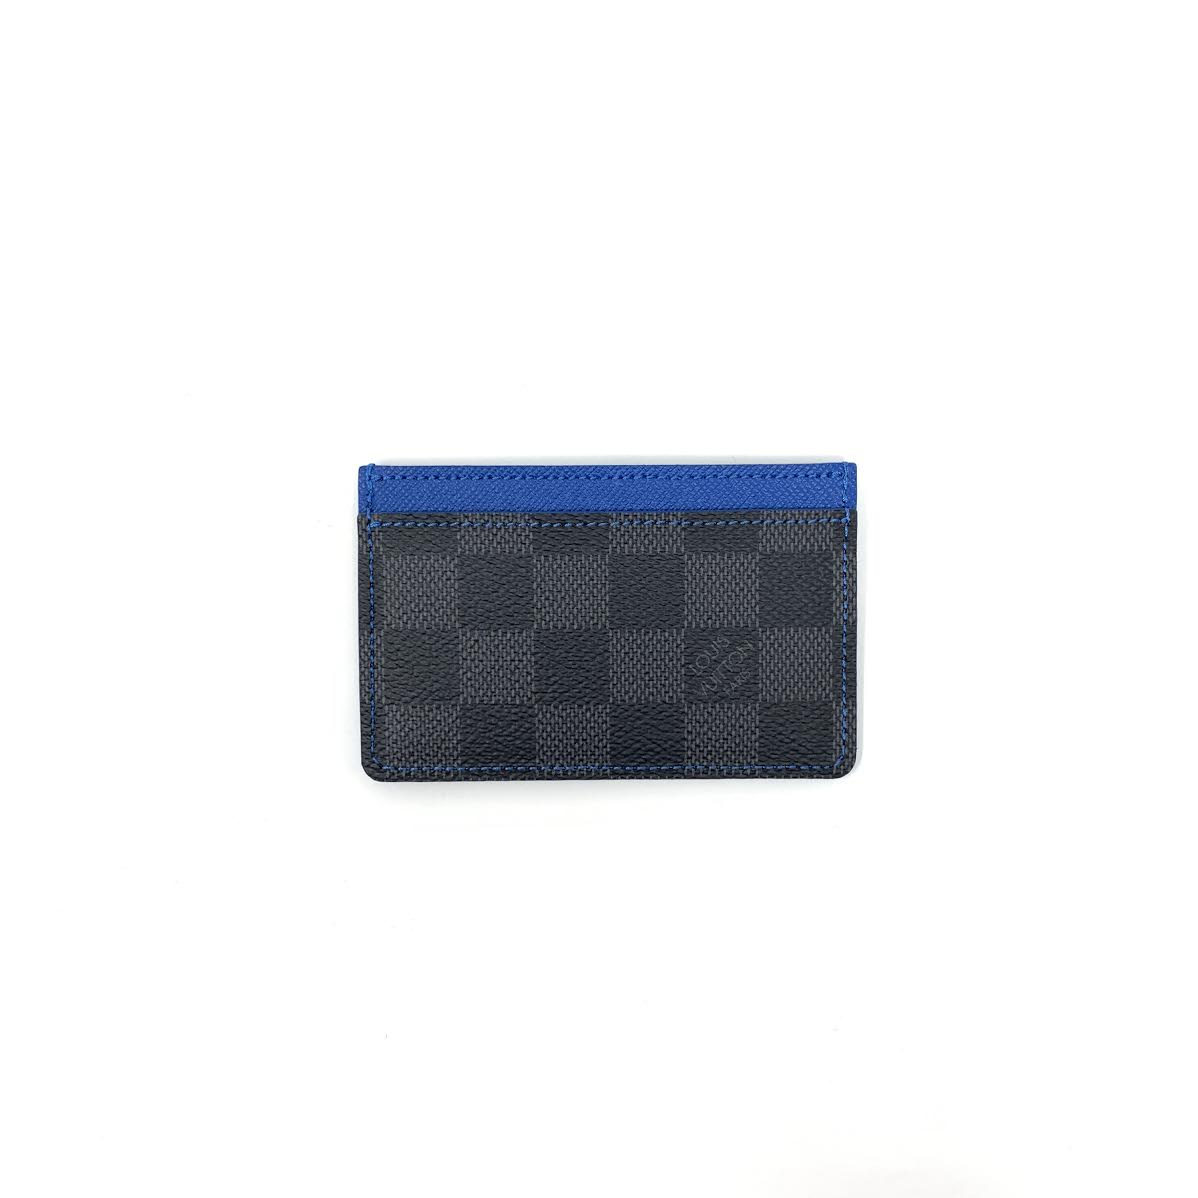 LOUIS VUITTON Pocket Organizer Damier Graphite Card Case Black-US